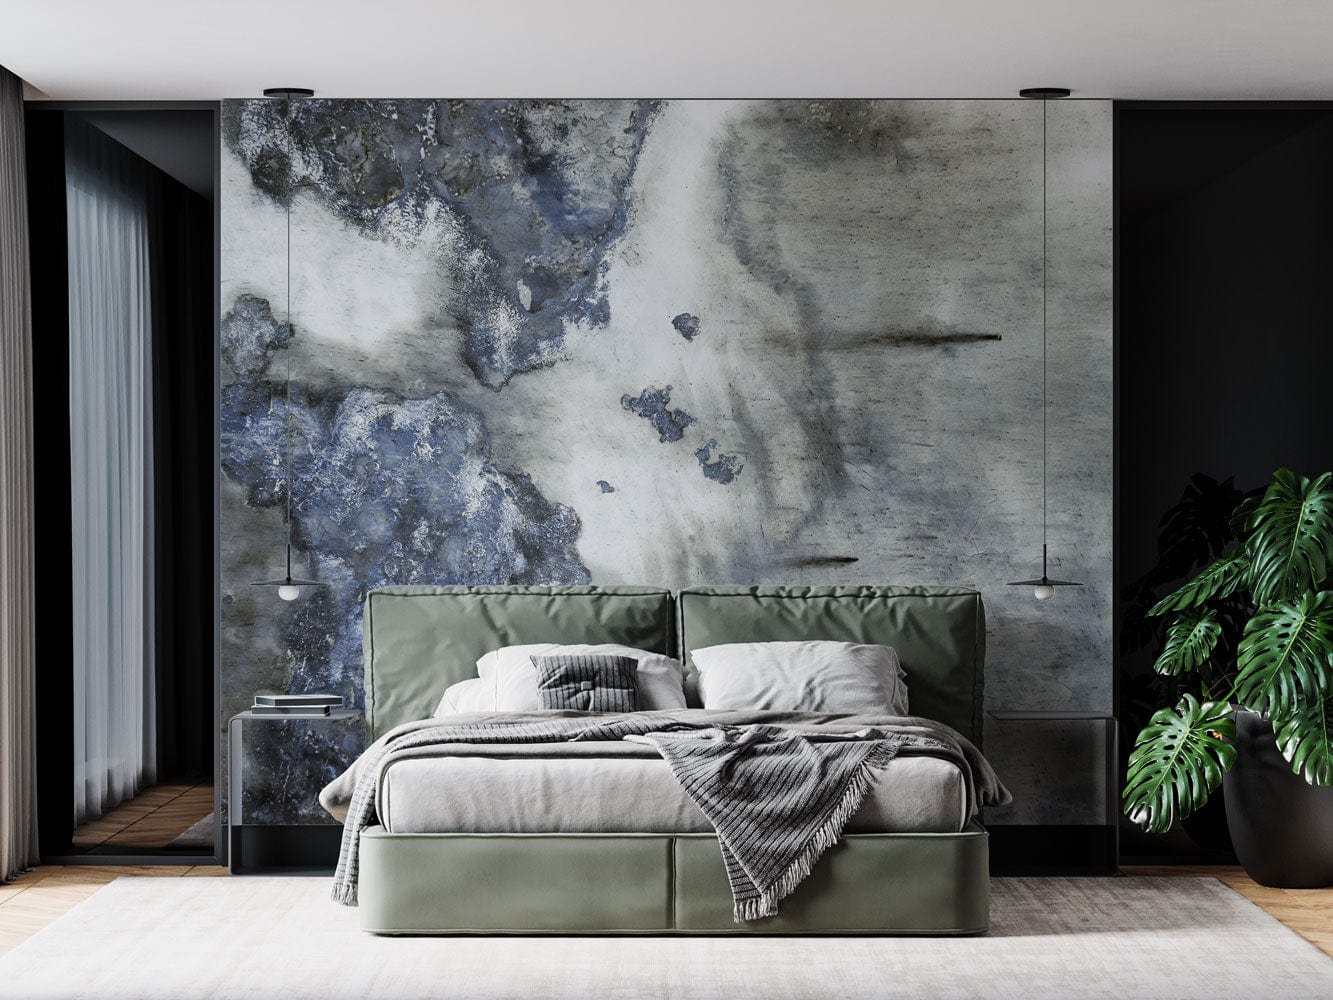 abstract wallpaper mural bedroom decoration design